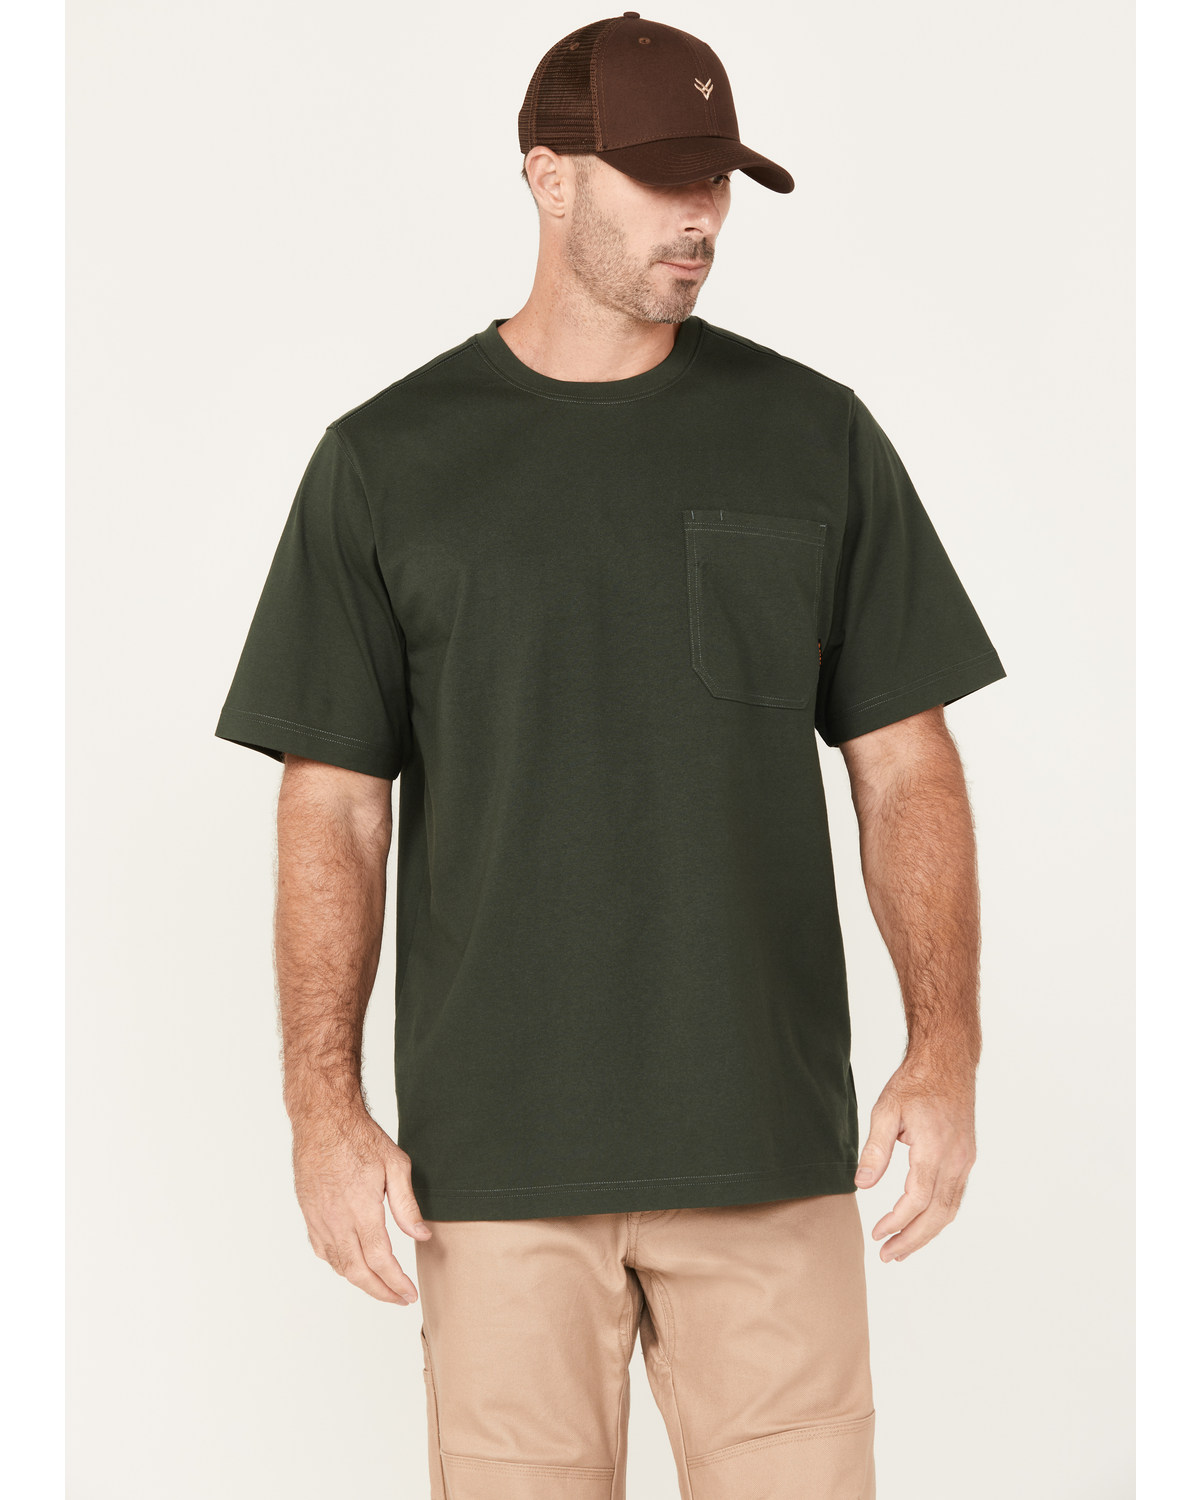 Hawx Men's Forge Short Sleeve Work T-Shirt